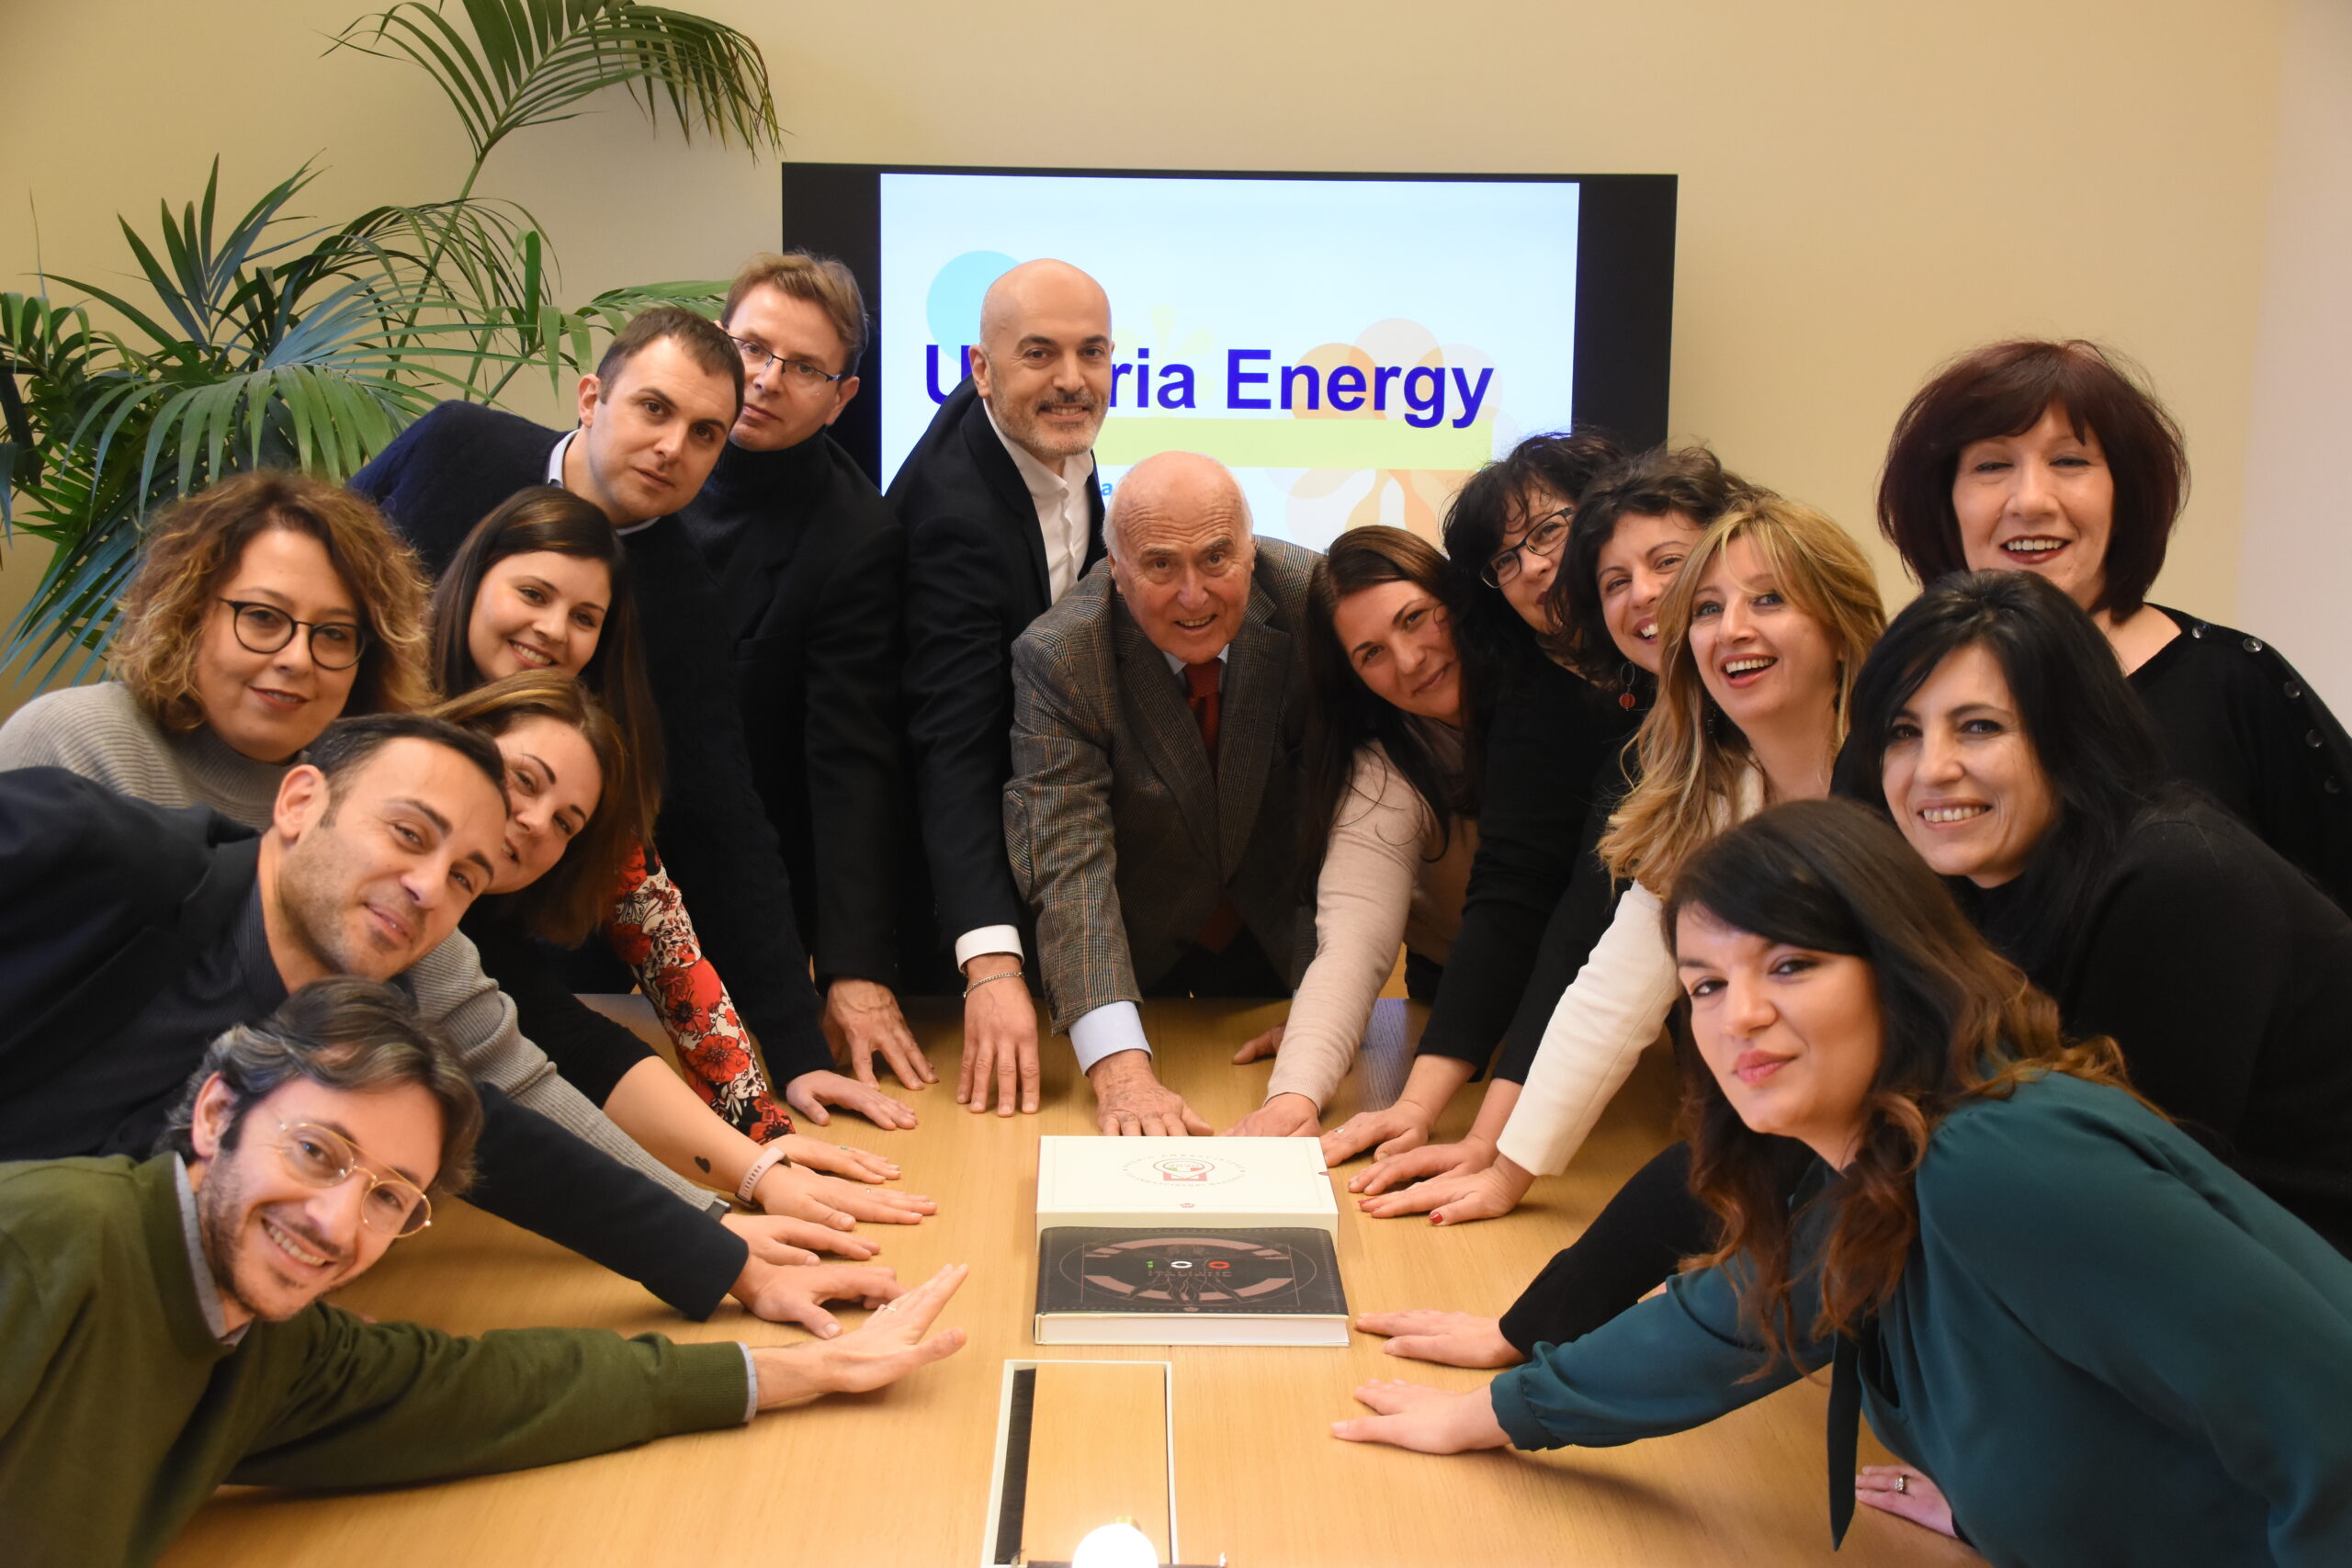 Team Umbria Energy